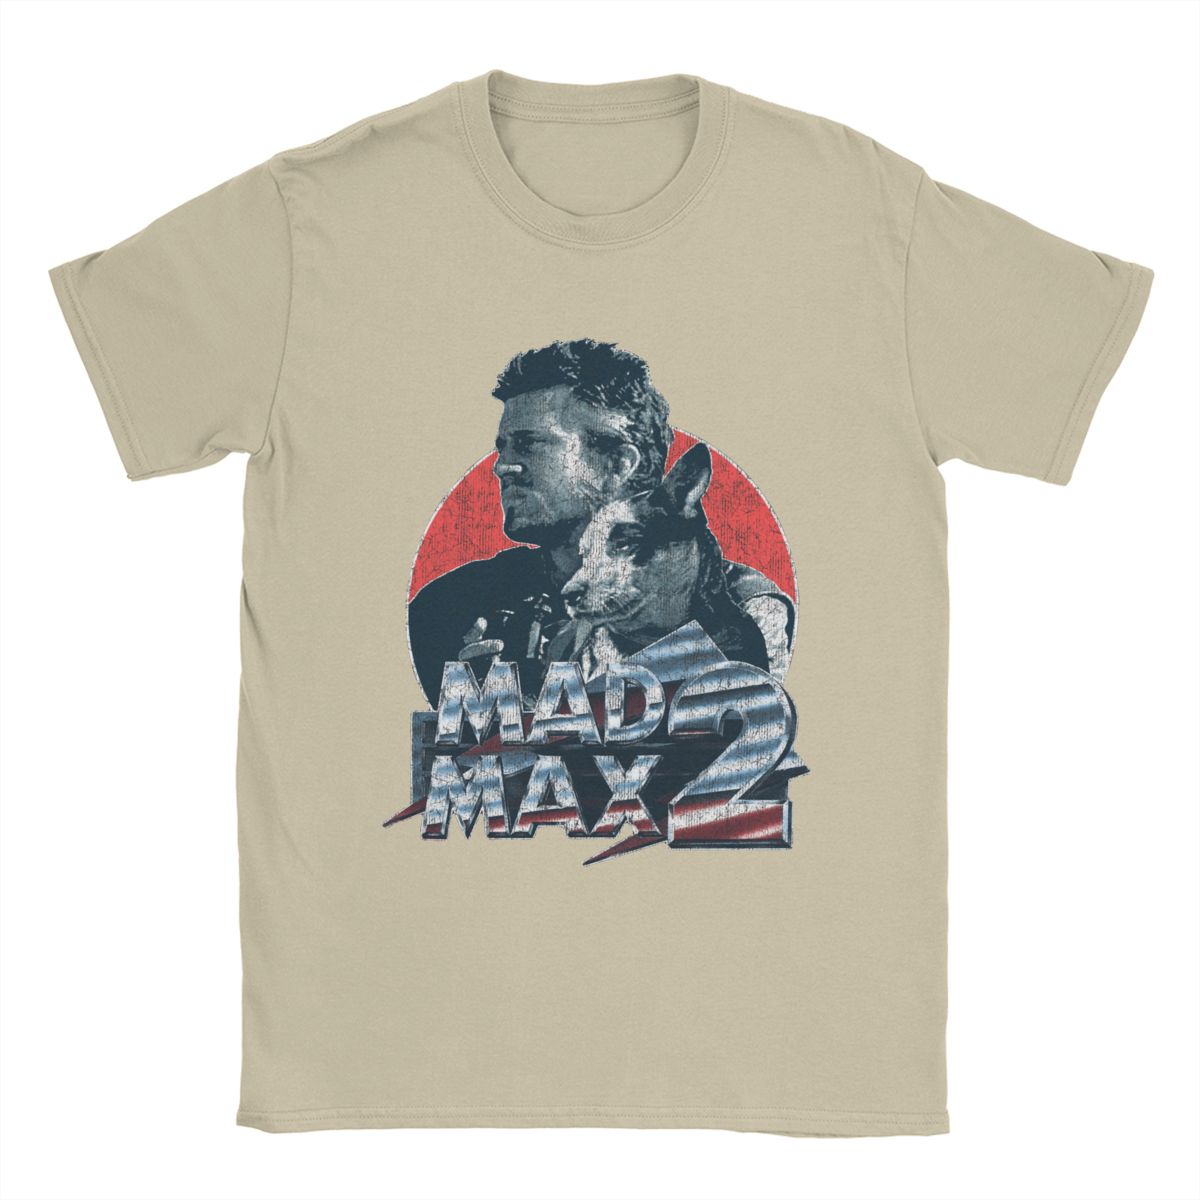 Mad Max - T-Shirt 100% Cotton - Classic 1980's Action - Movie Buff Fanwear-Khaki-S-